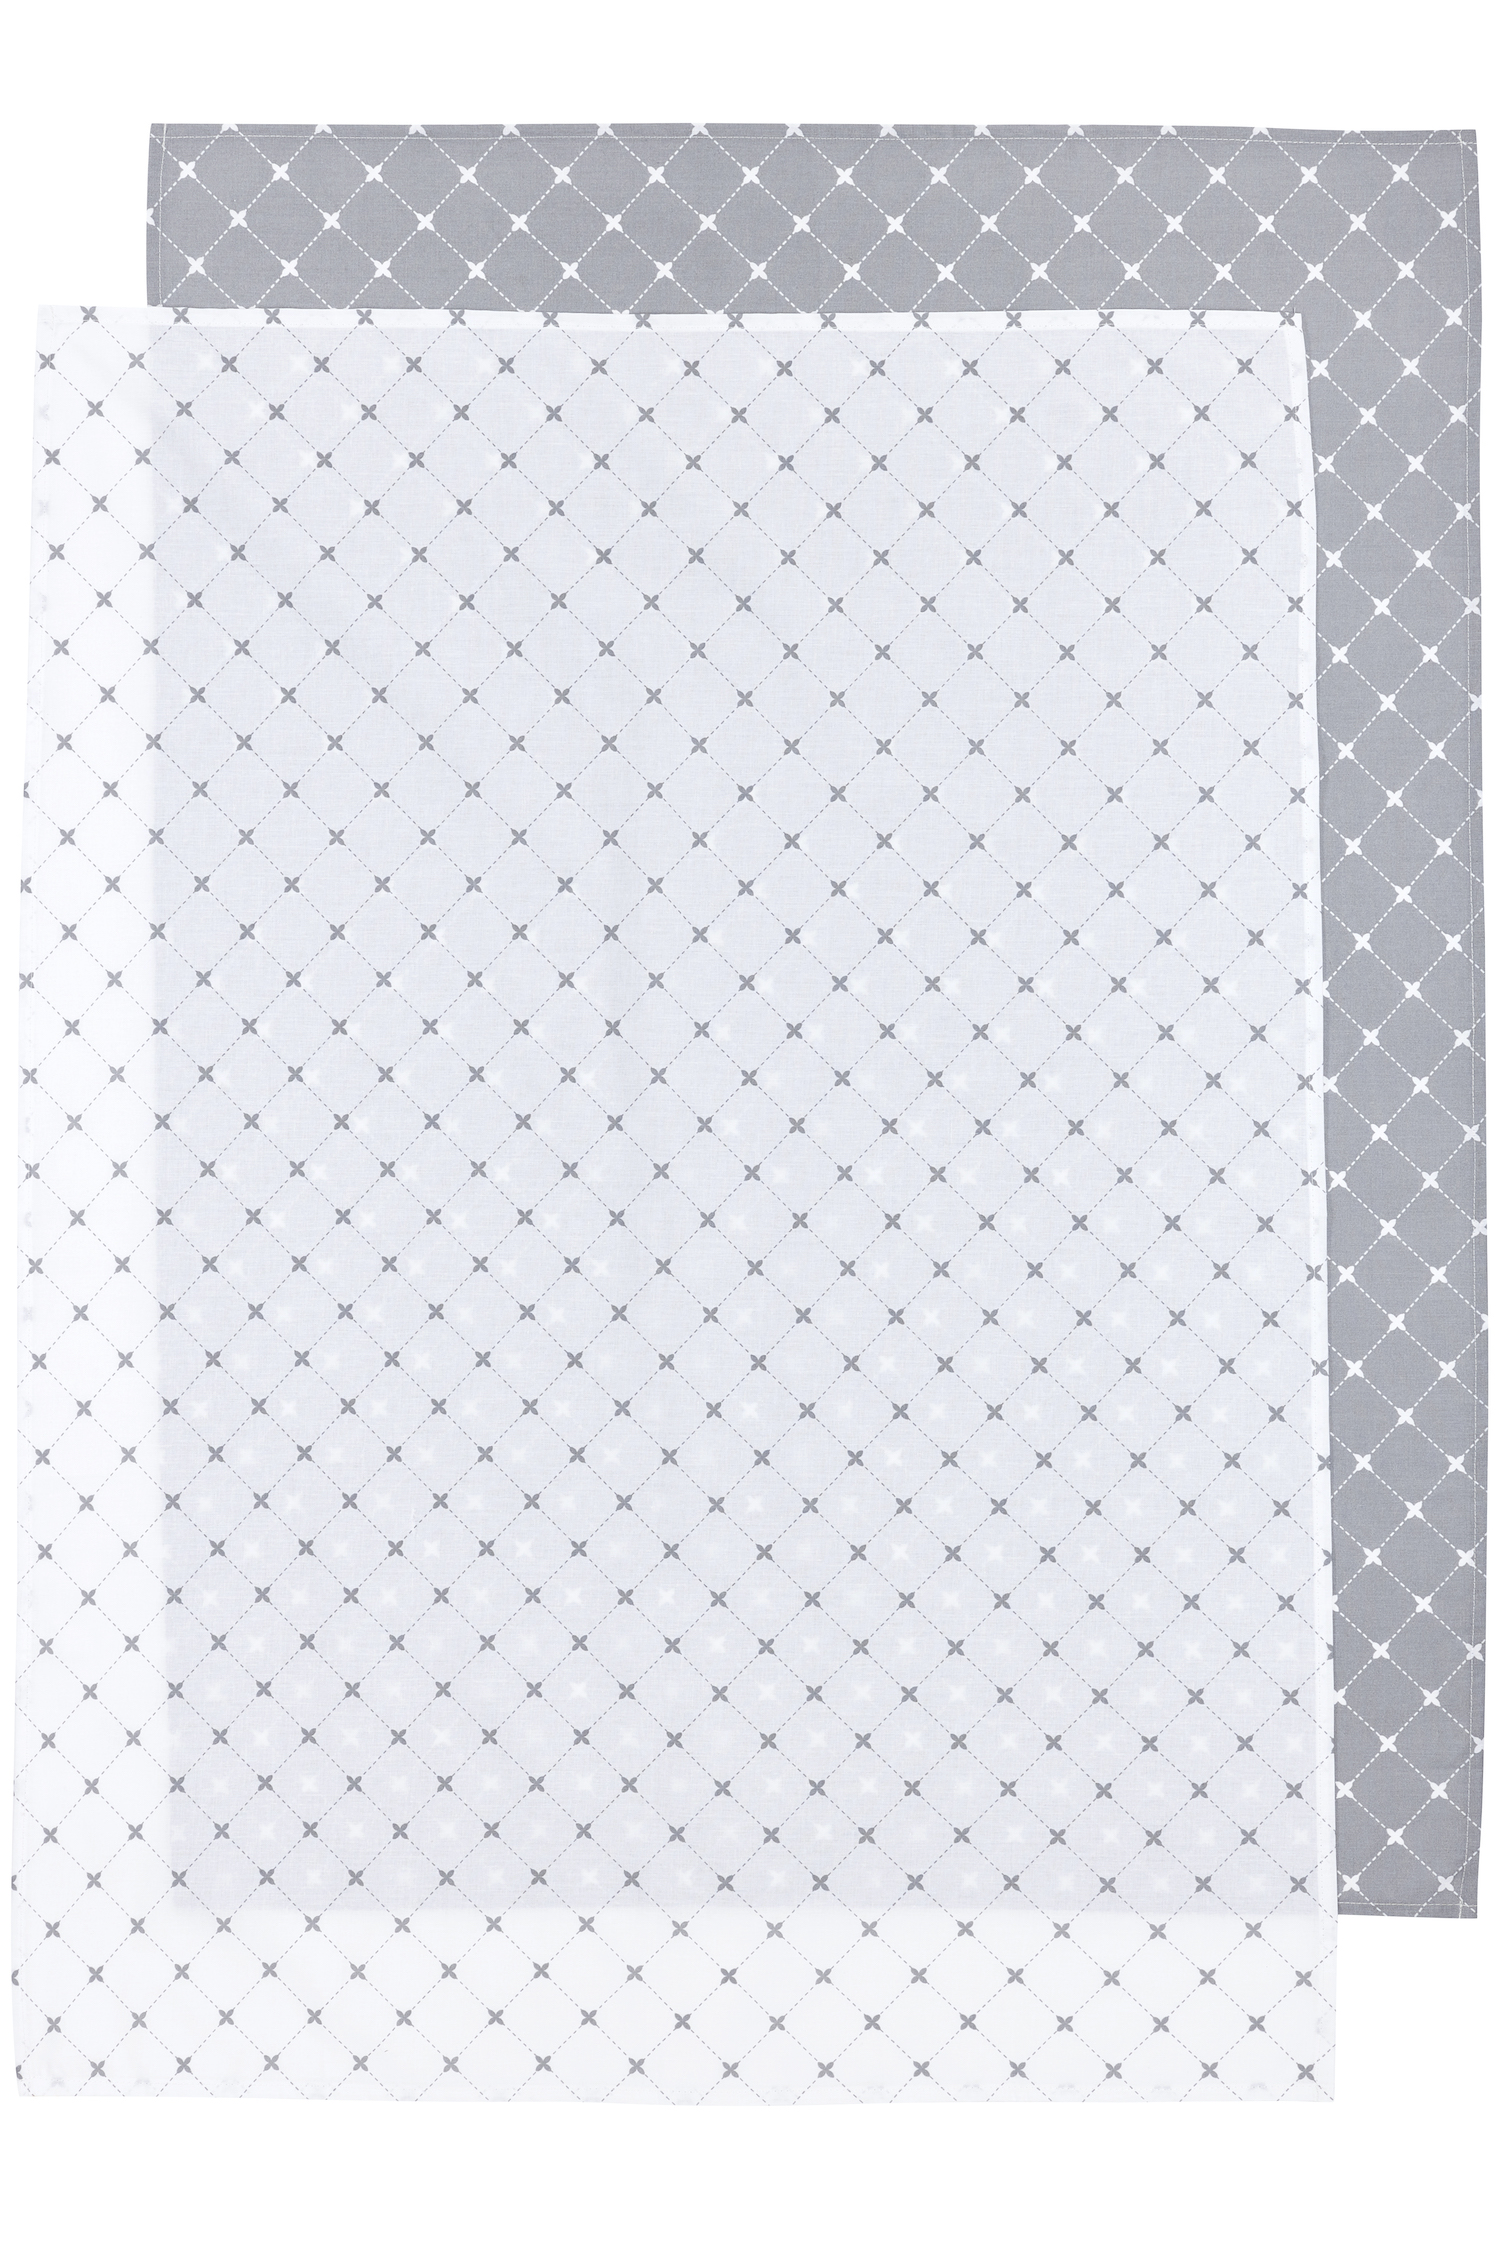 Meyco X Mrs. Keizer Cot Bed Sheet 2-pack Louis - Grey - 100x150cm